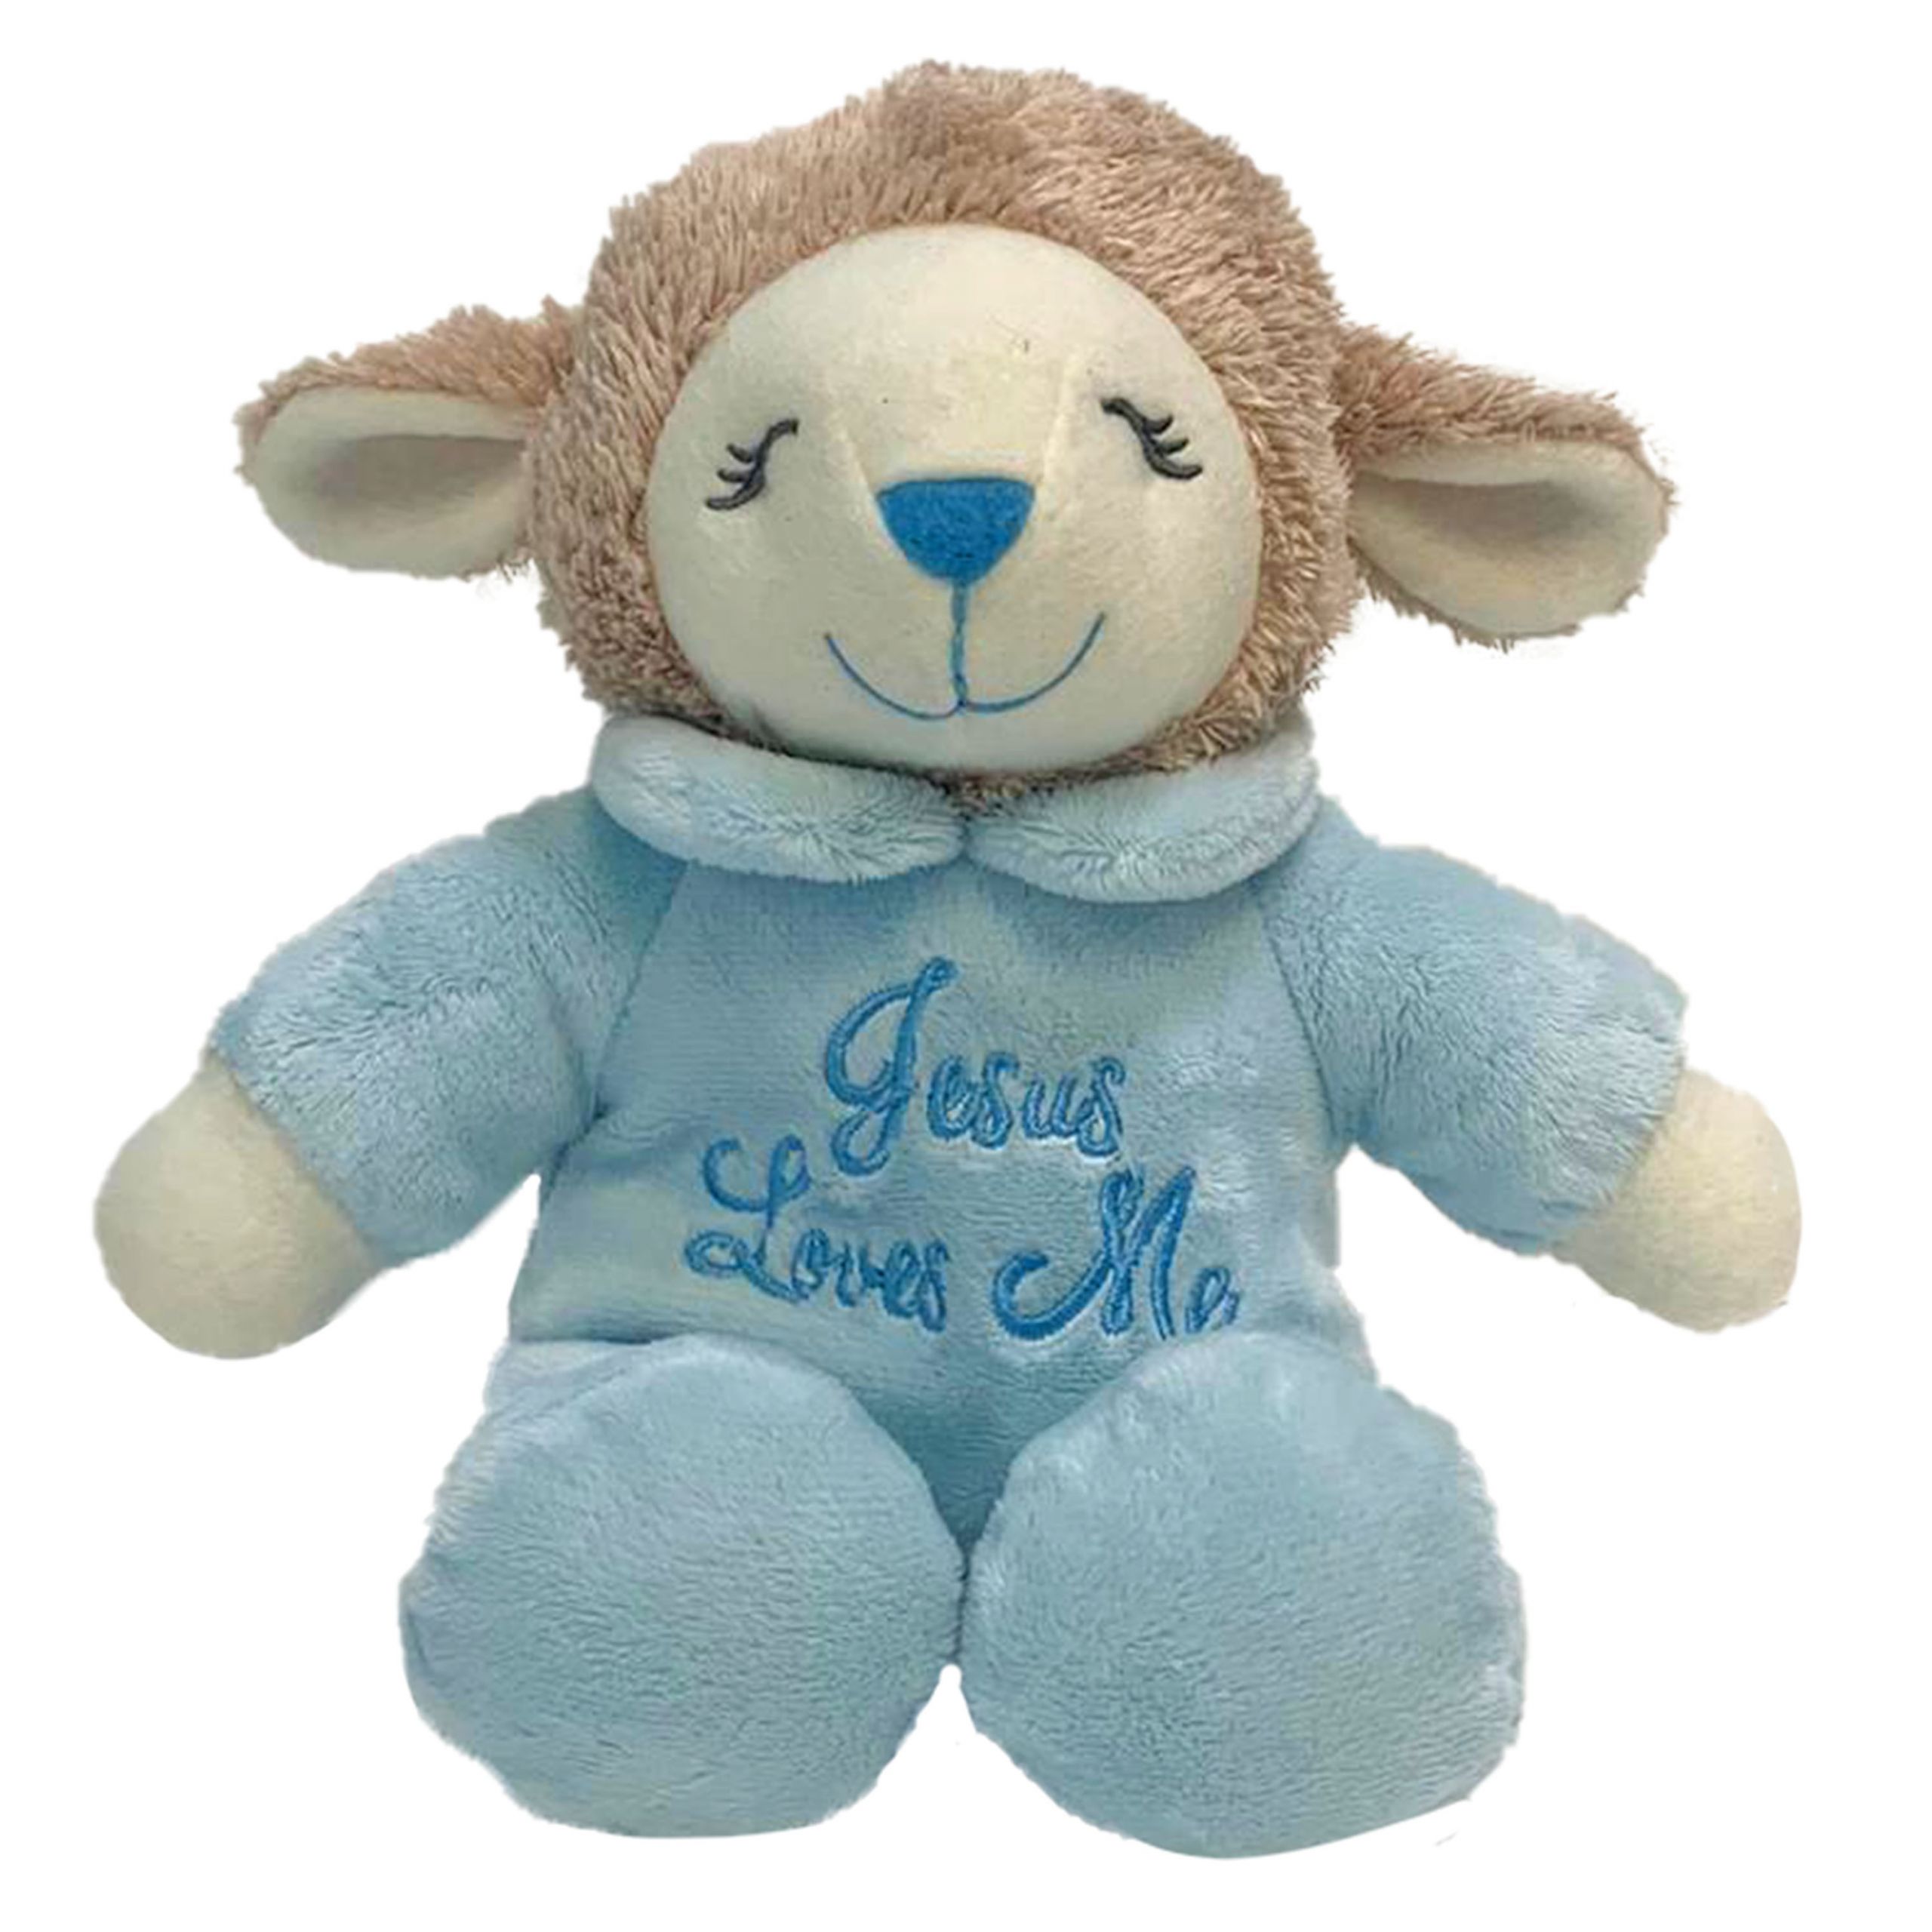 Easter Lamb Stuffed Animal
 Way To Celebrate Easter Musical Plush Toy Jesus Loves Me